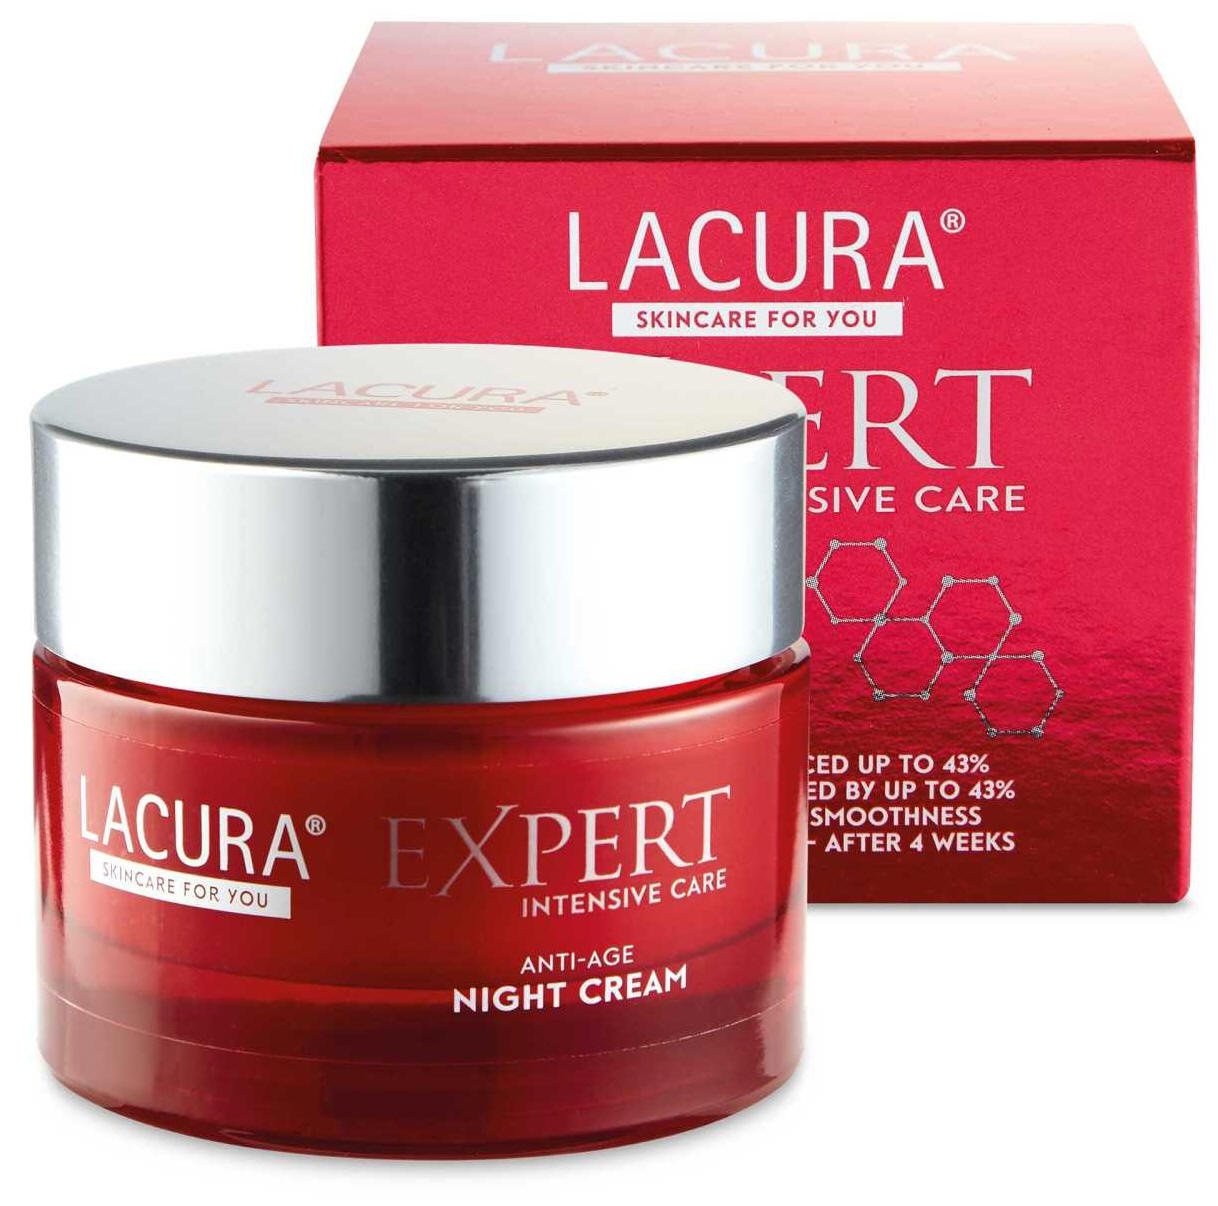 LACURA Expert Intensive Care Anti Age Night Cream